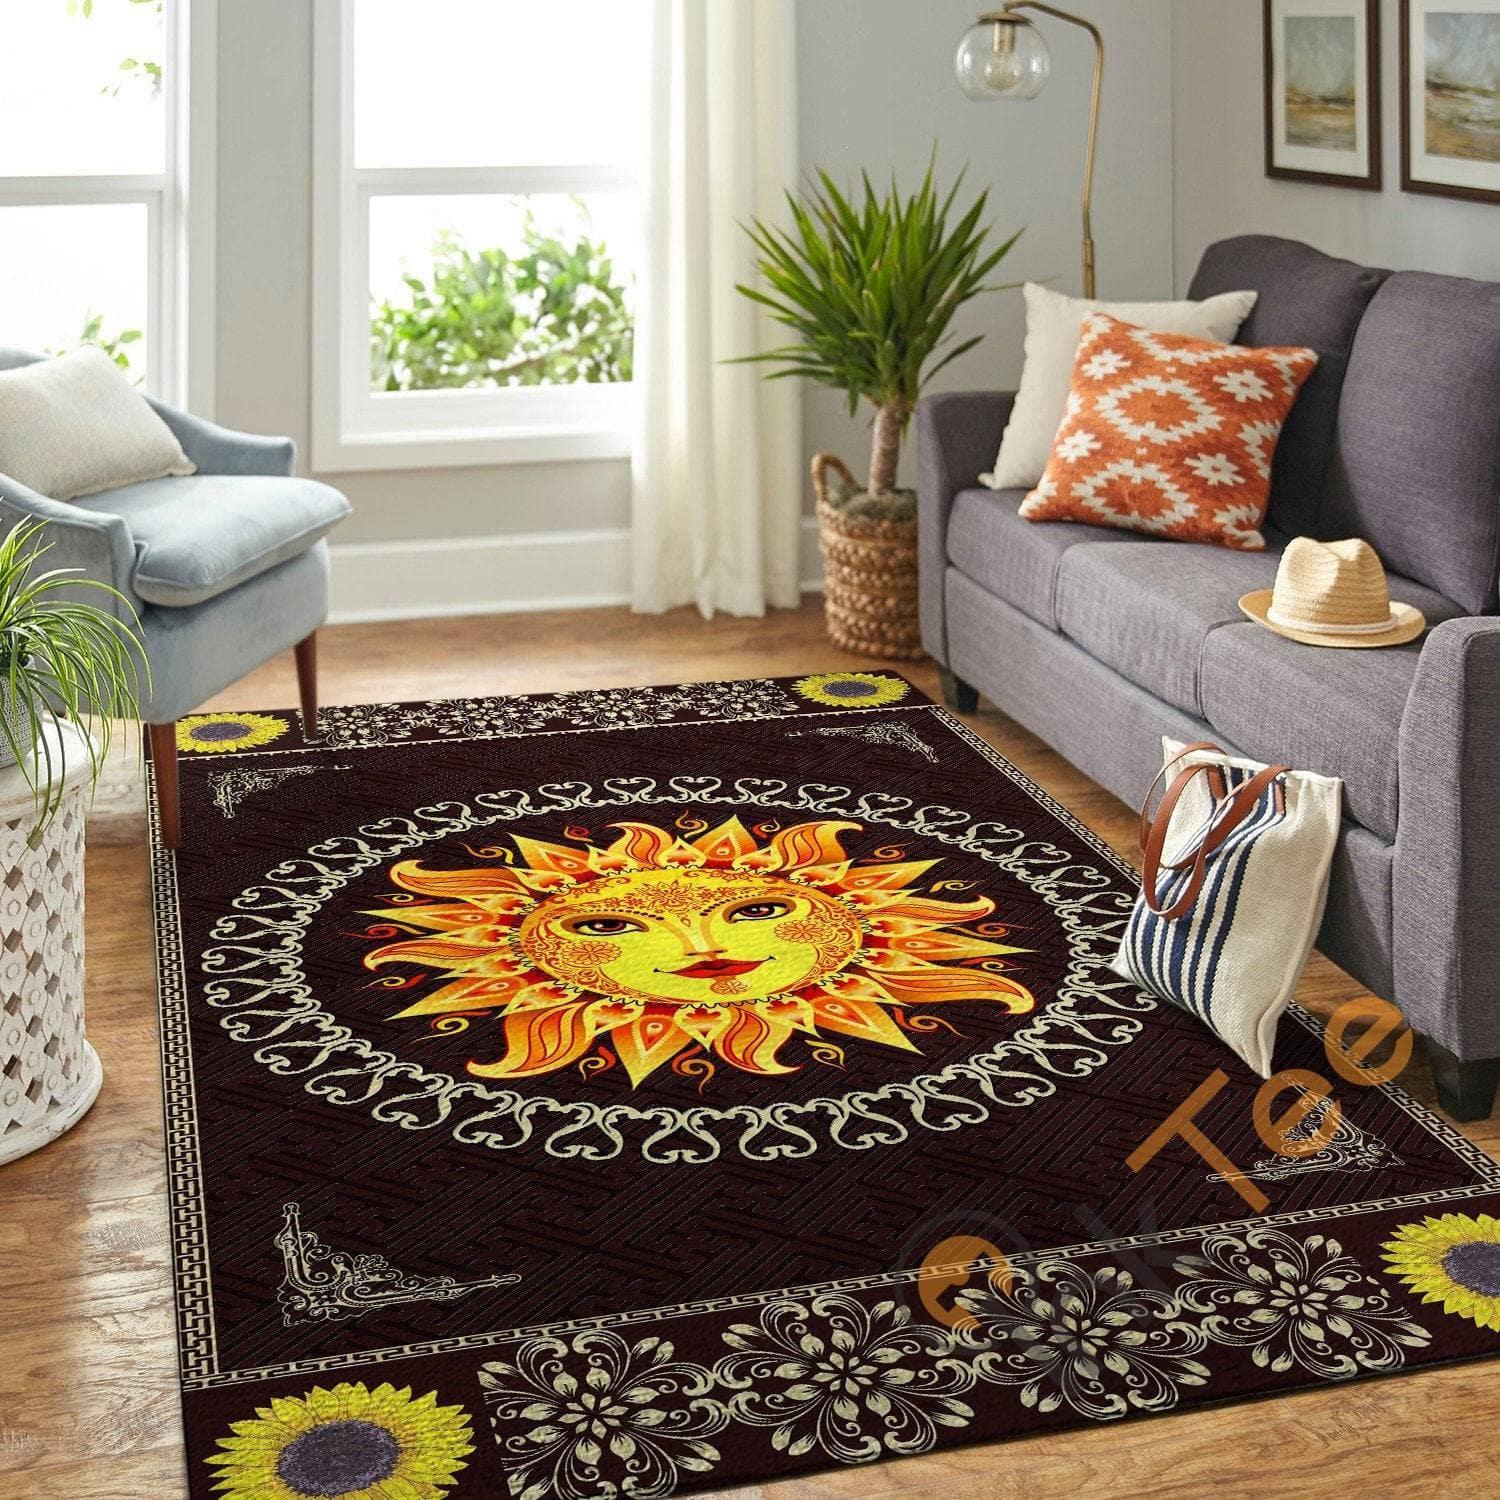 Fabulous Sun With Sunflower Pattern Hippie Floor Decor Soft Living Room Bedroom Carpet Highlight For Home Cute Rug